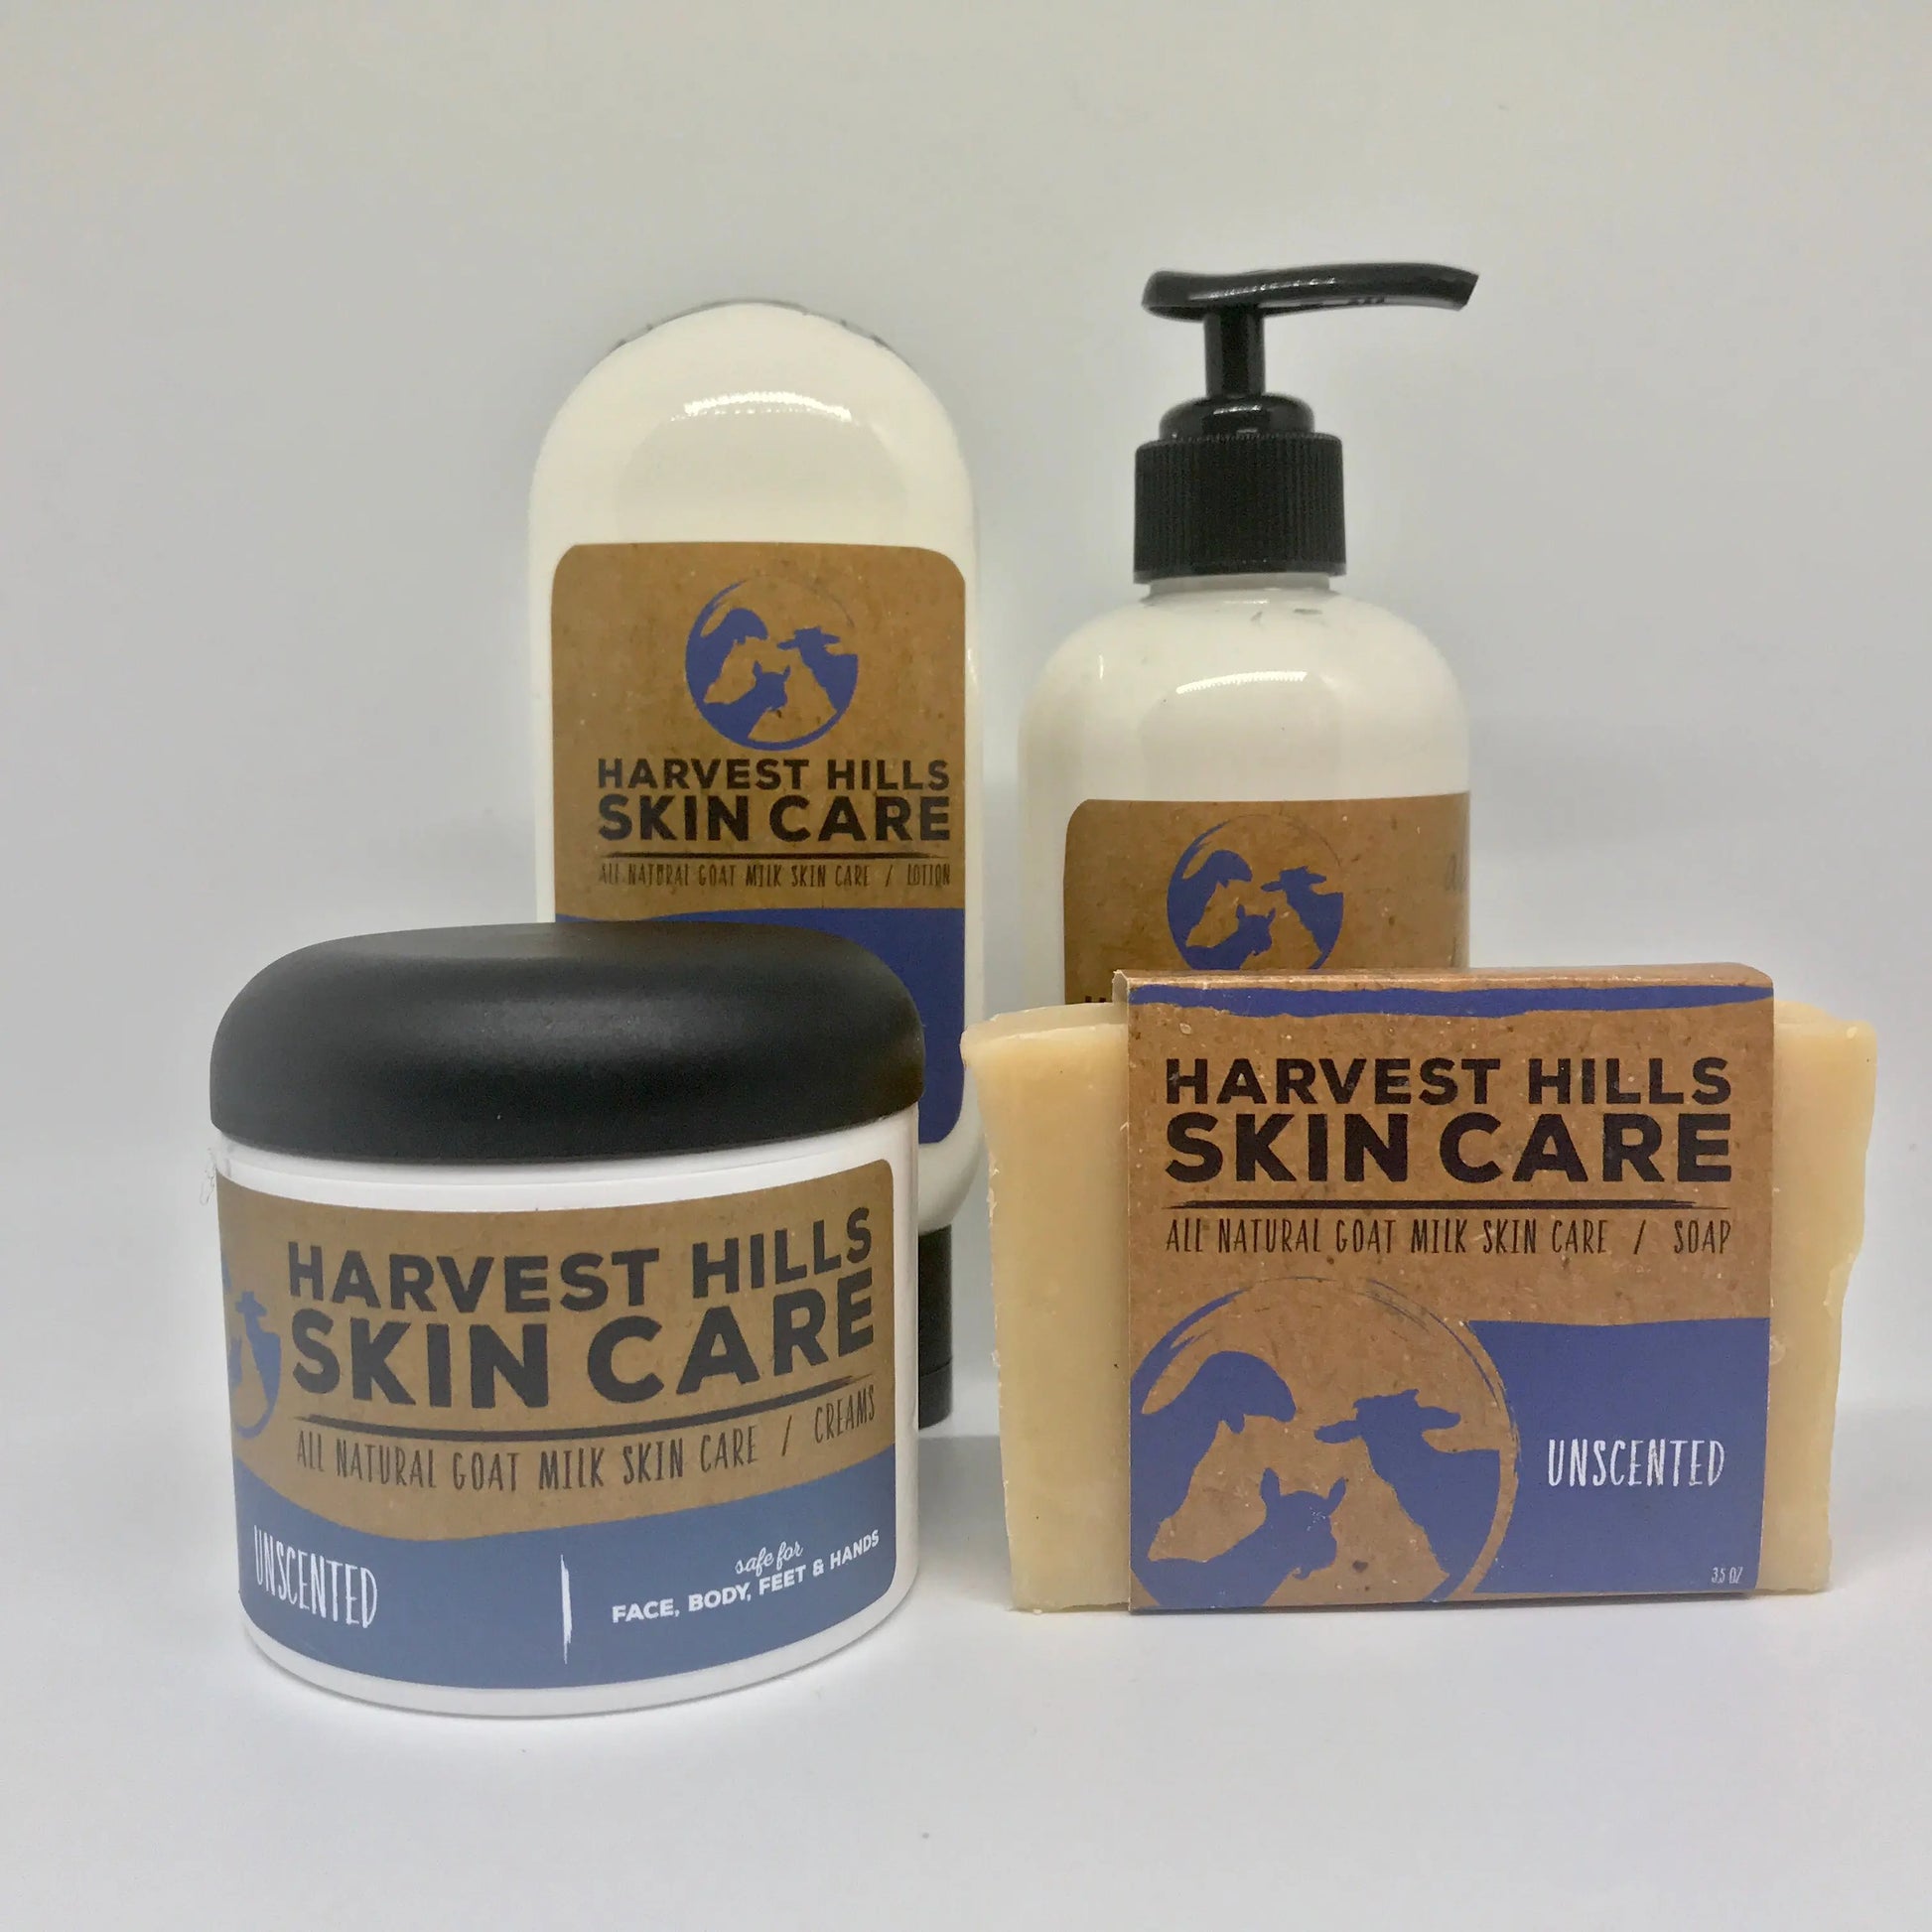 Unscented Face & Body Soap Harvest Hills Skin Care All Natural Goat Milk Skin Care